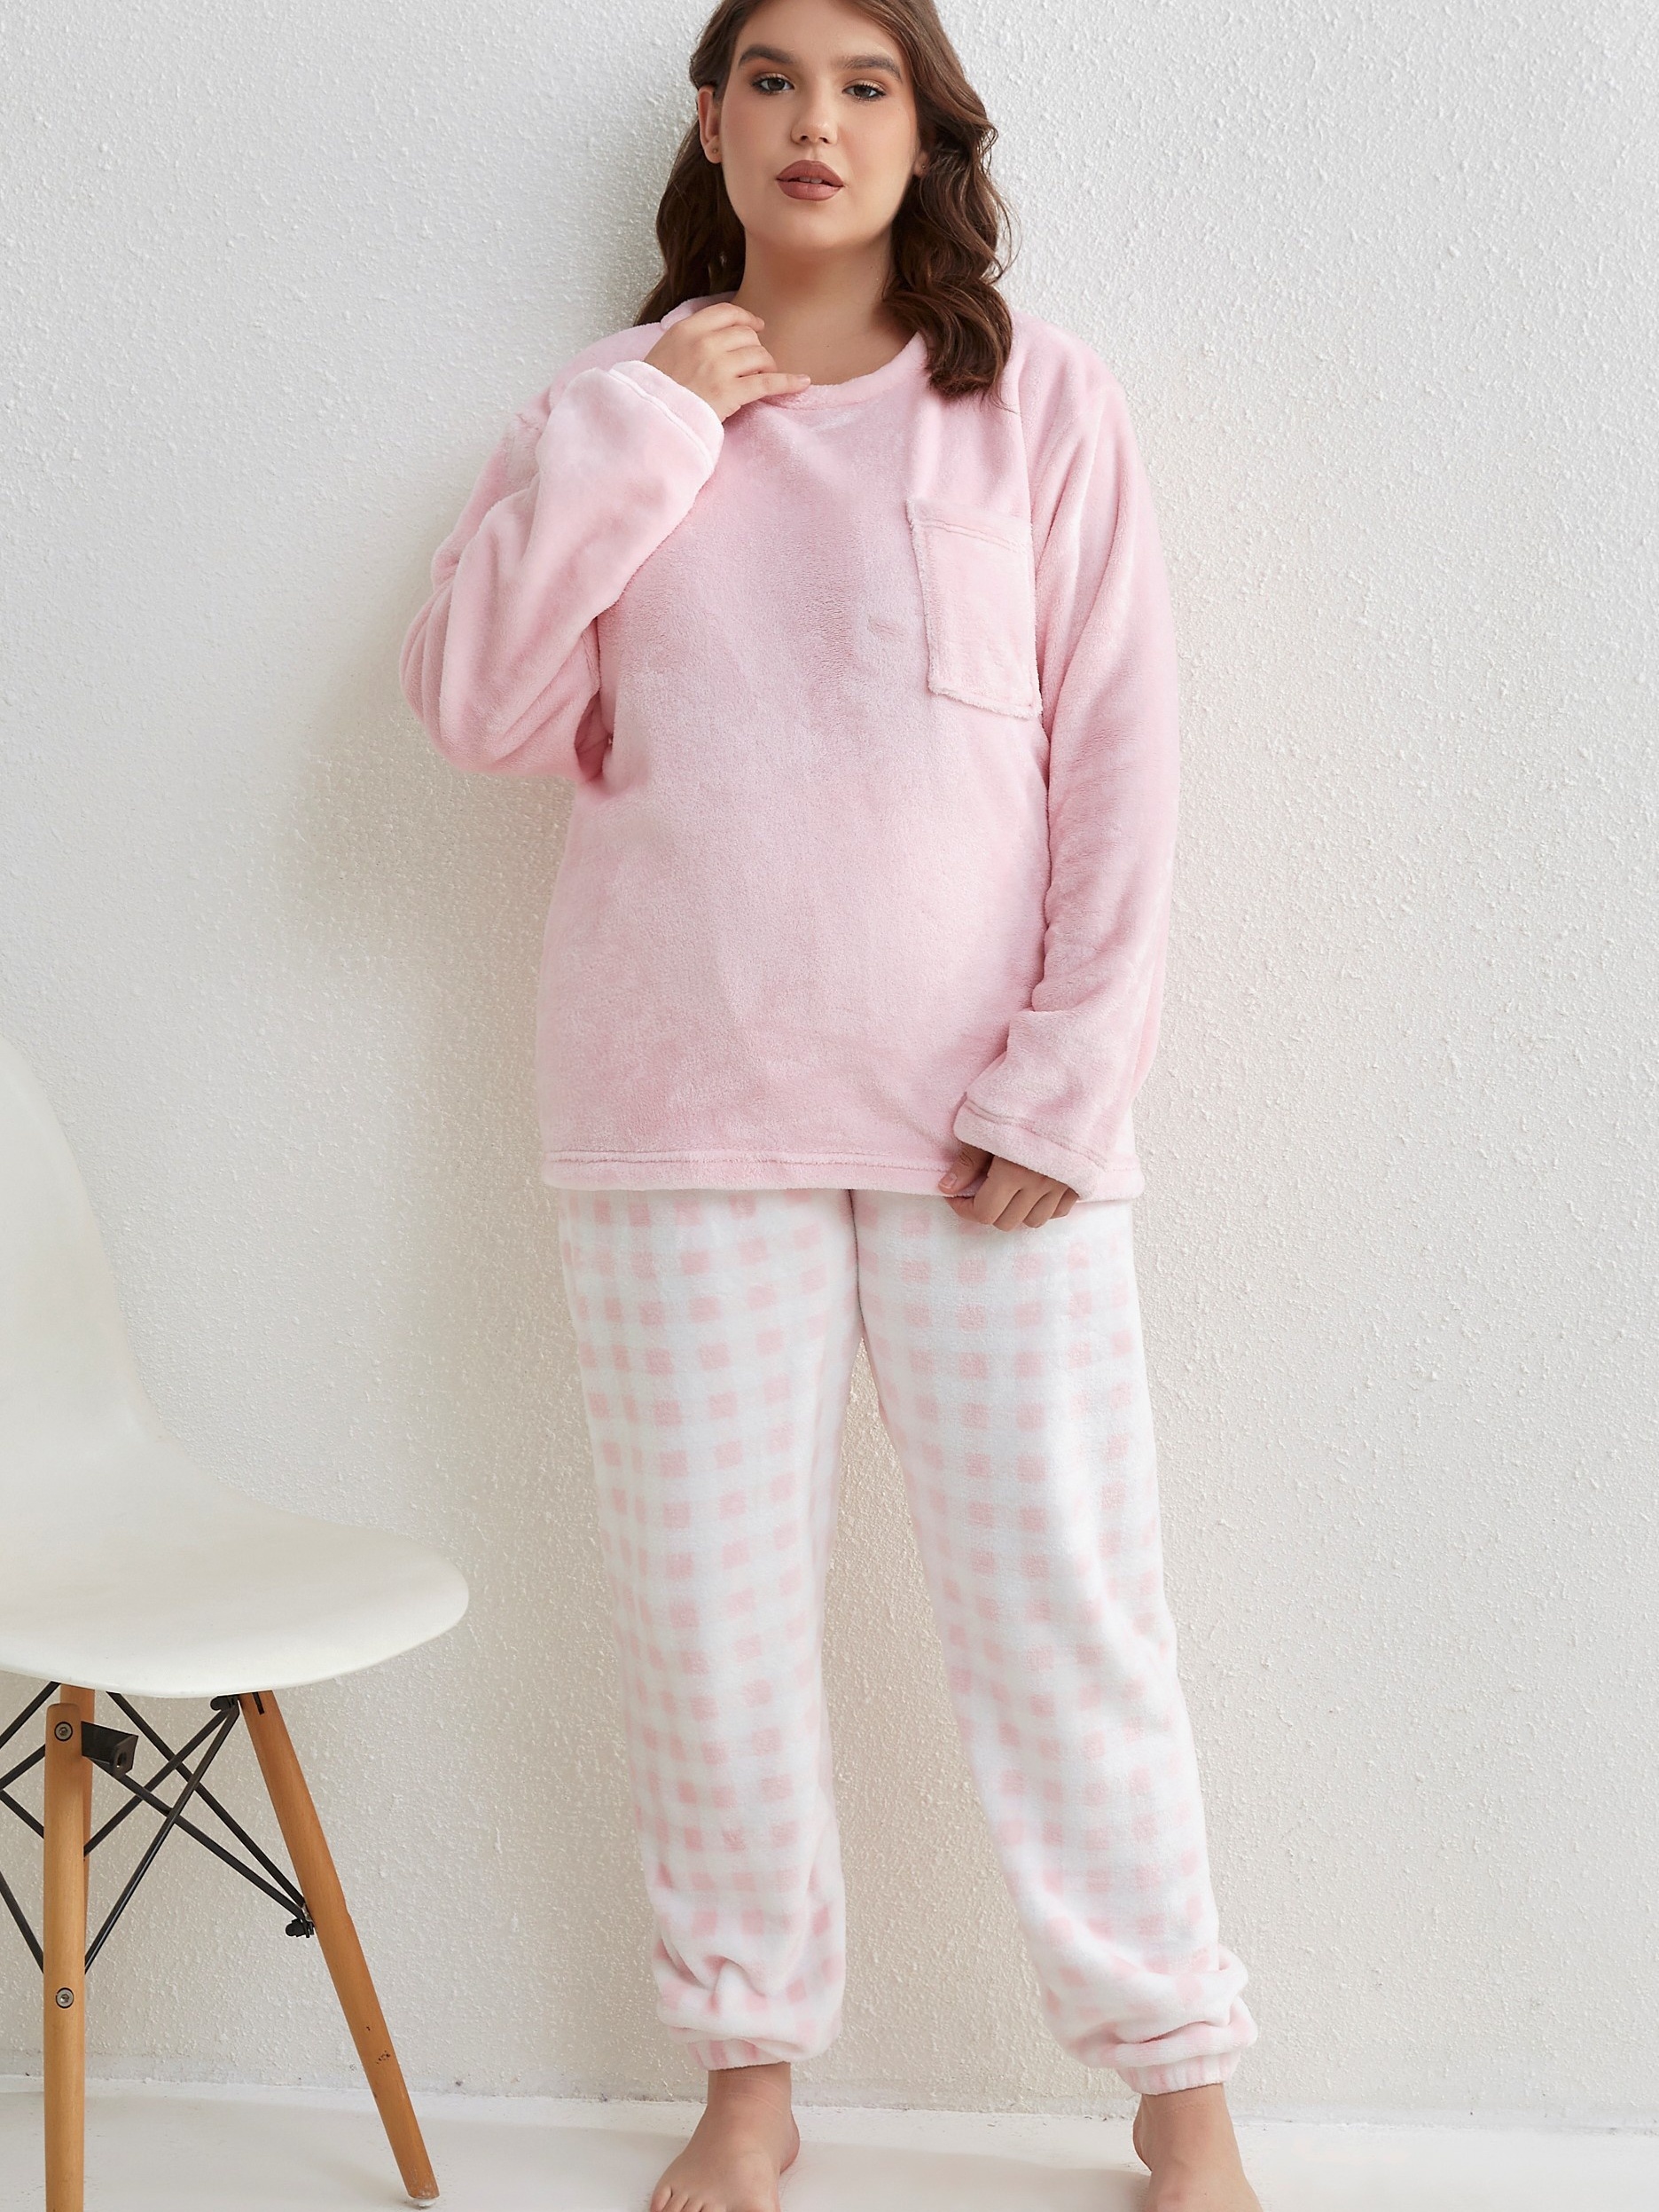 Women's Flannel Pajamas & Flannel PJ Sets